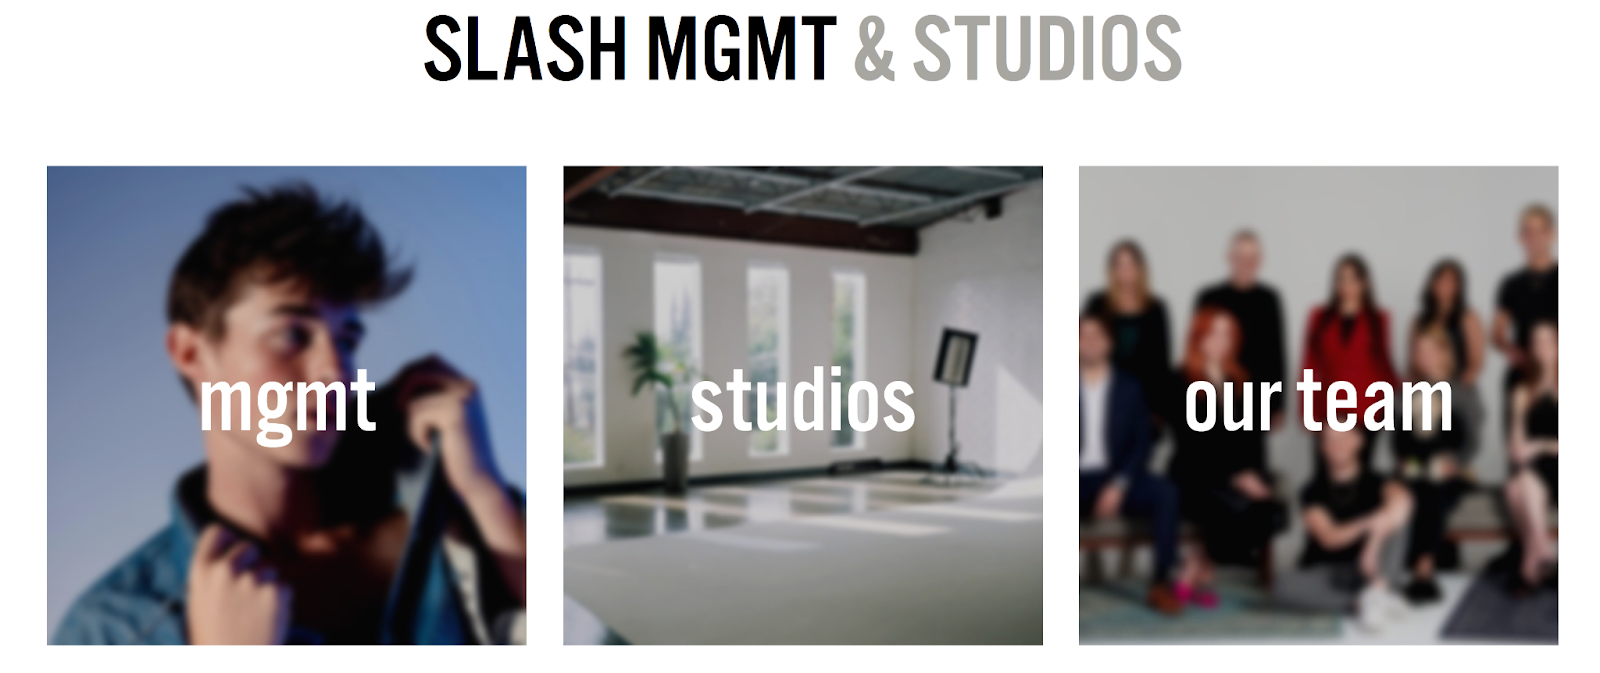 Jake Webb President & Co-Founder of Slash MGMT: Brand Partnerships, Influencer Talent & Nikita Dragun